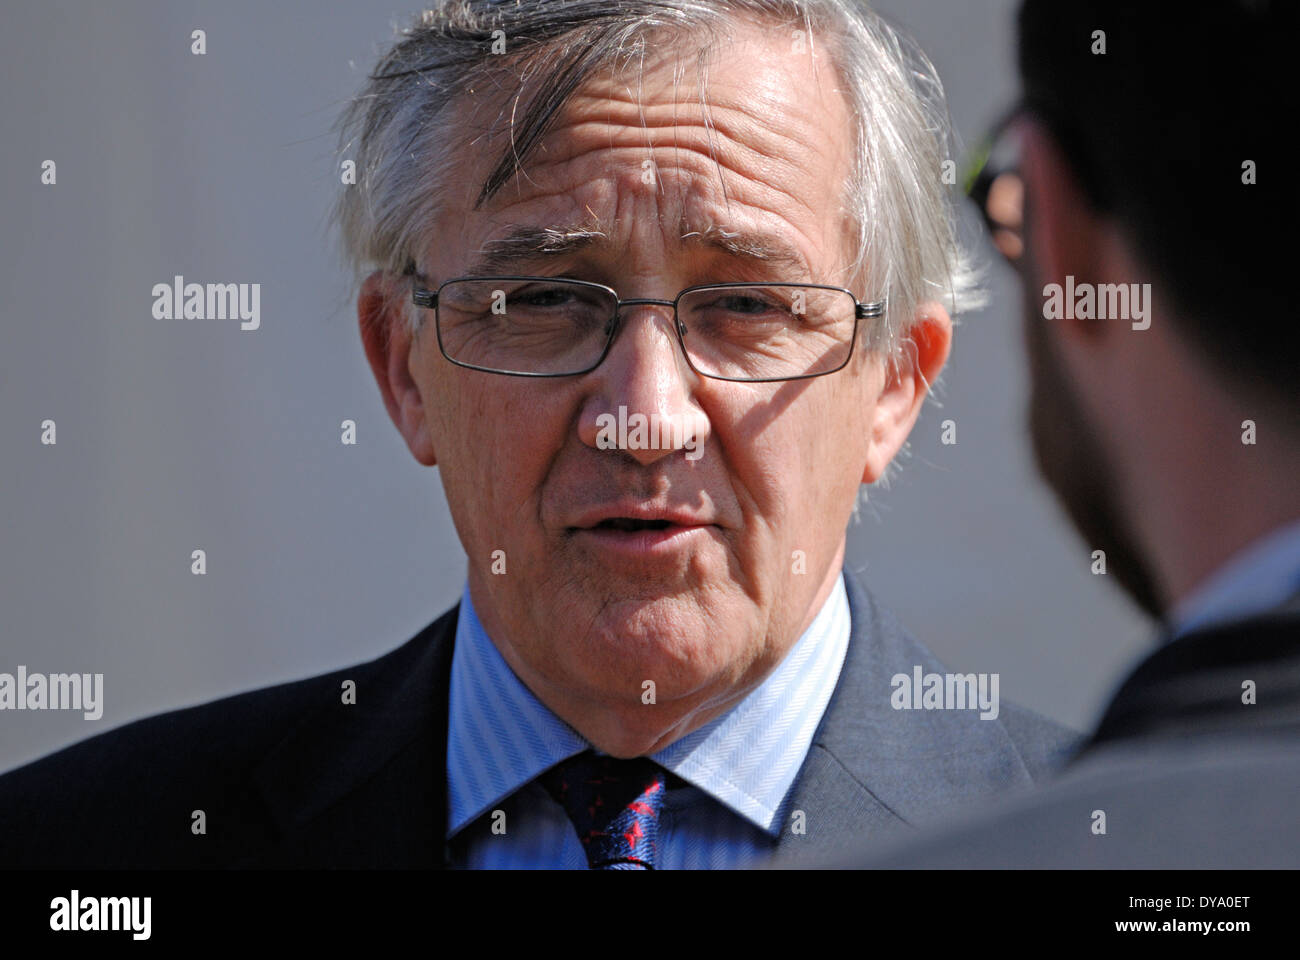 Sir Gerald Howarth MP (Conservative; Aldershot) being interviewed outside parliament Stock Photo